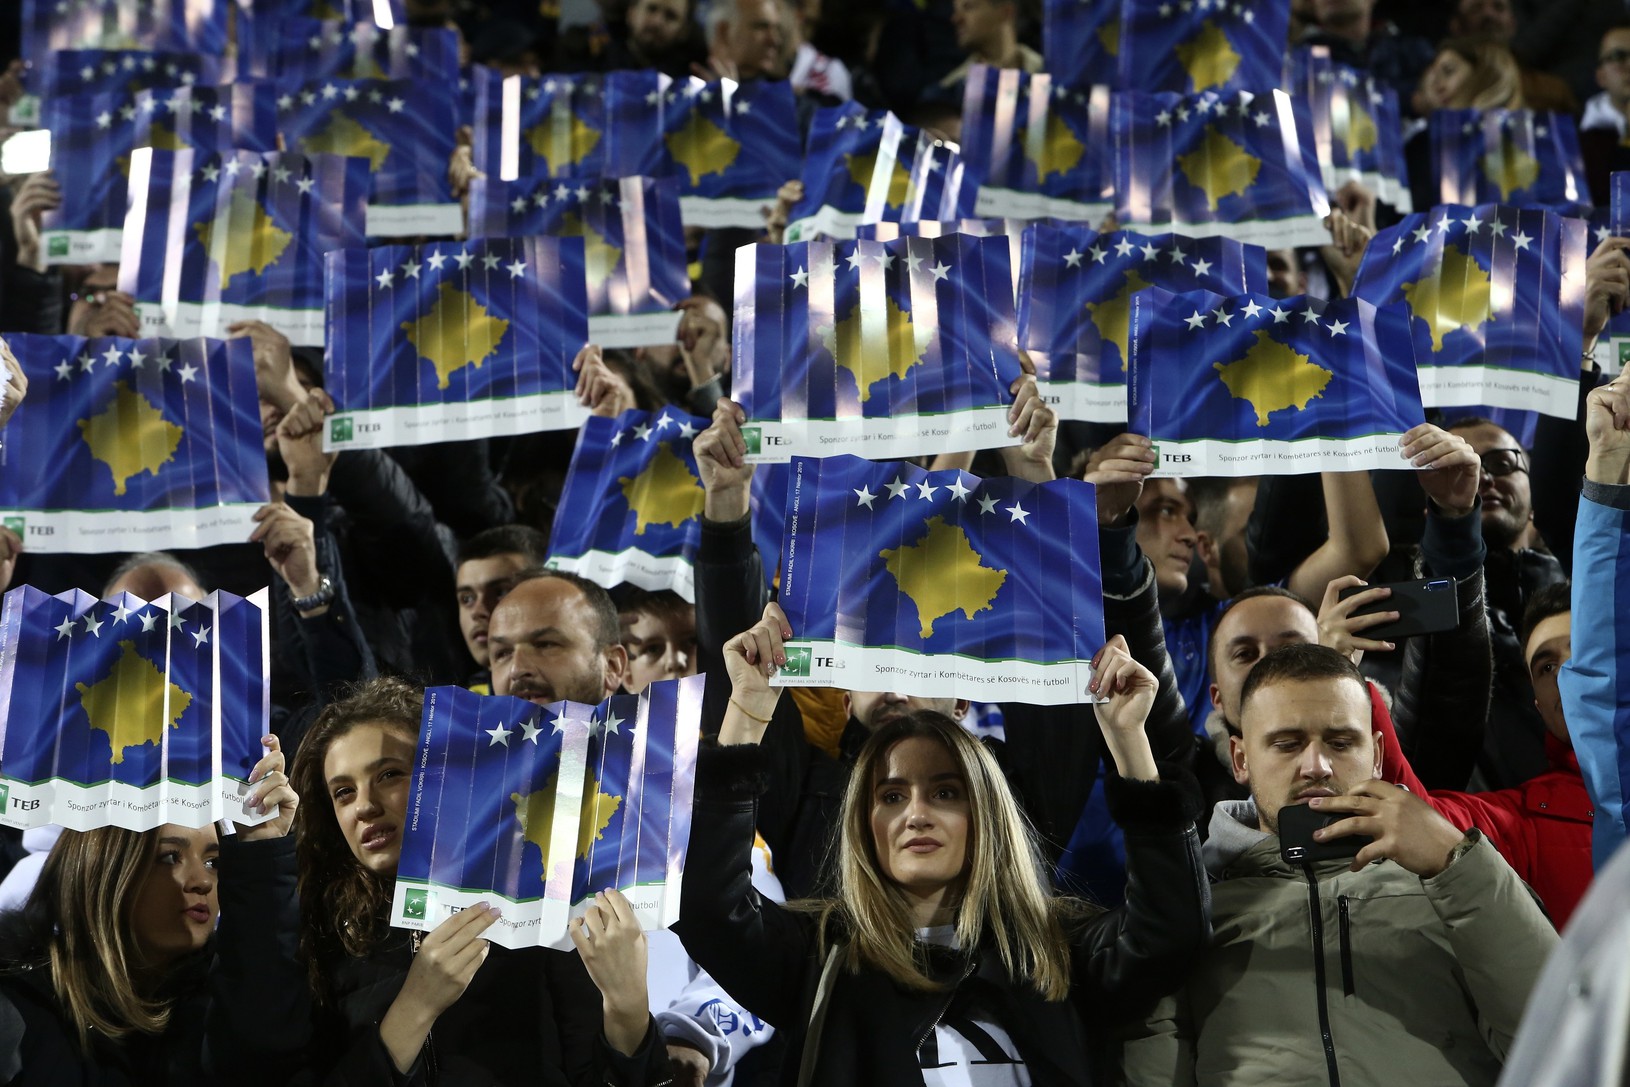 Fanúšikovia Kosova